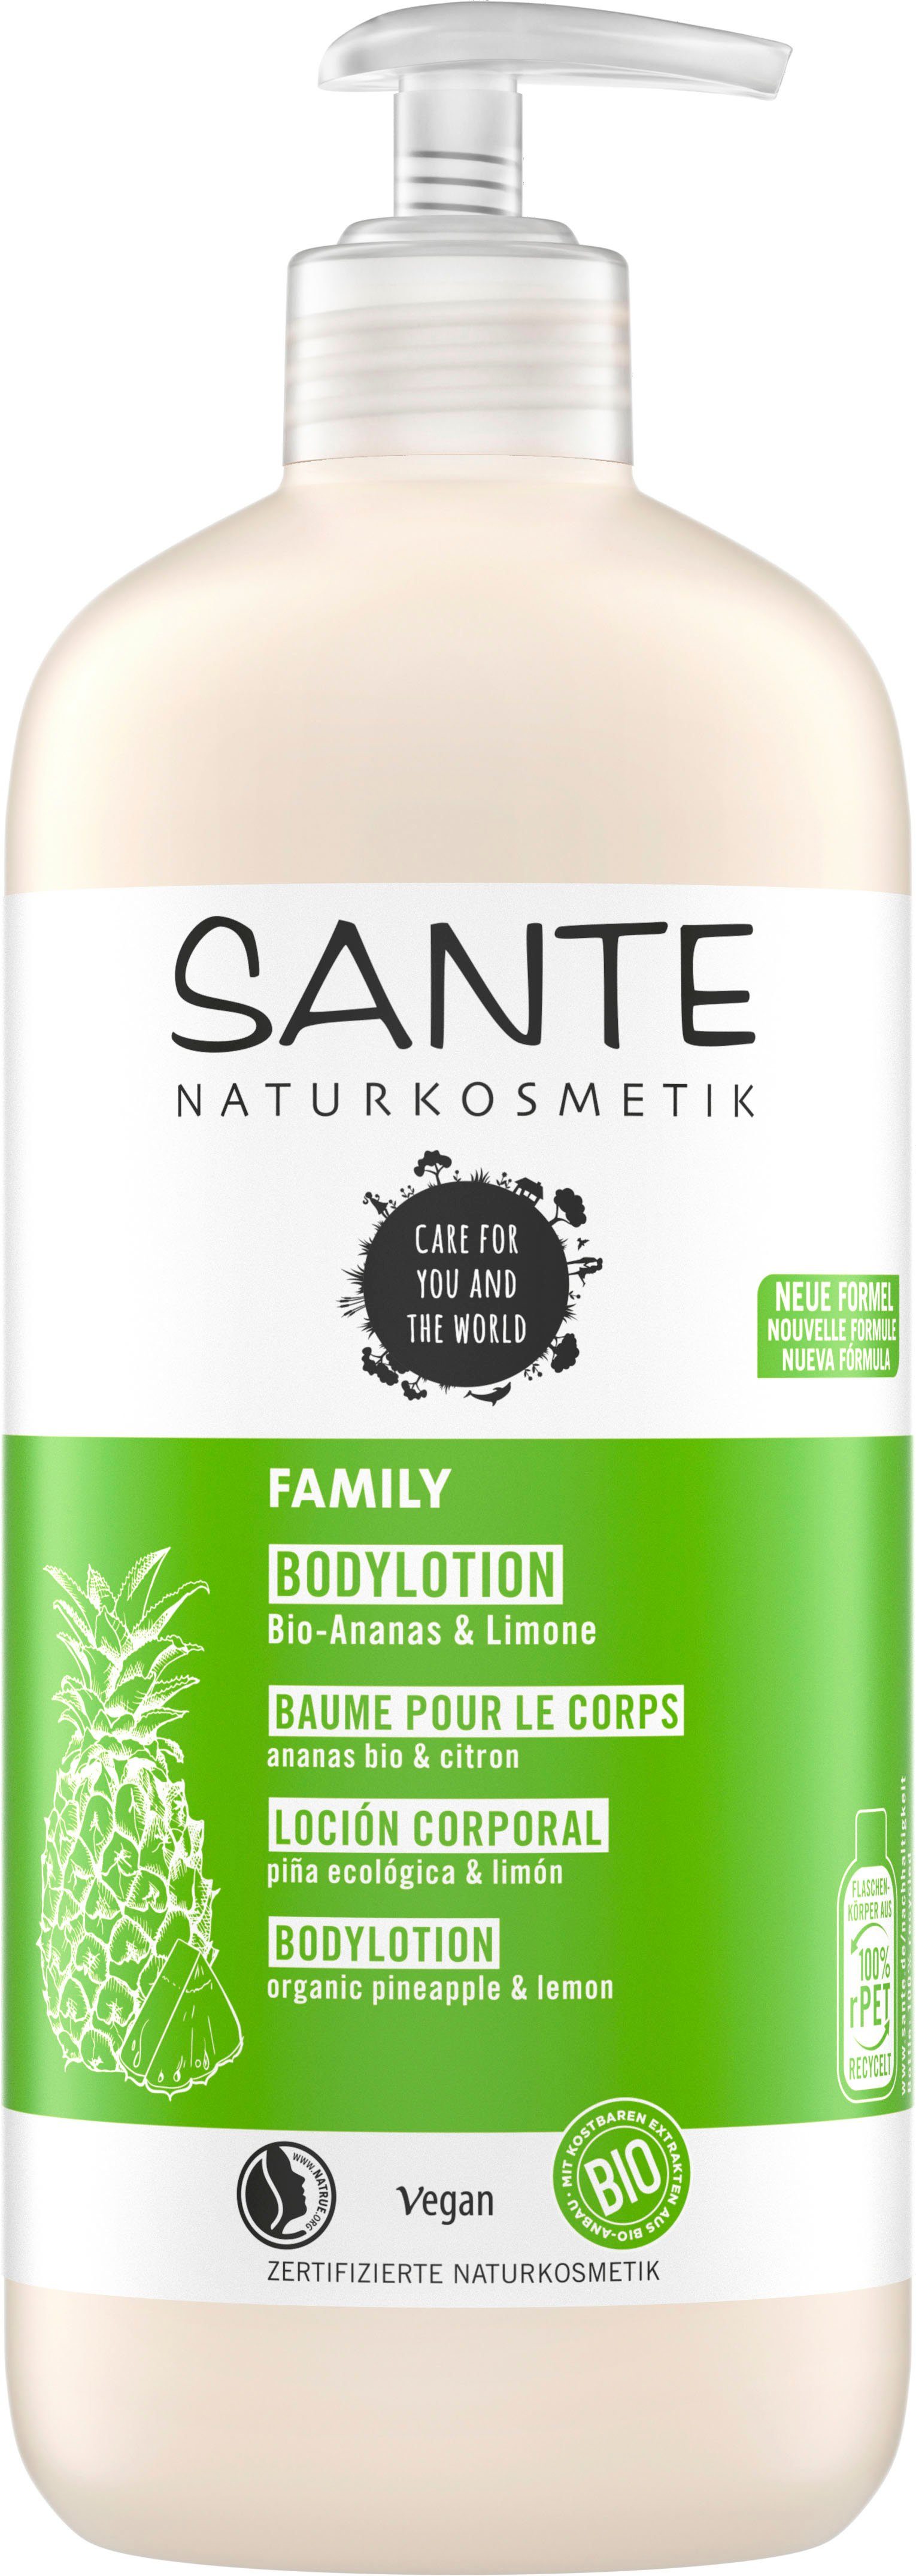 SANTE Bodylotion Sante Bodylotion Family